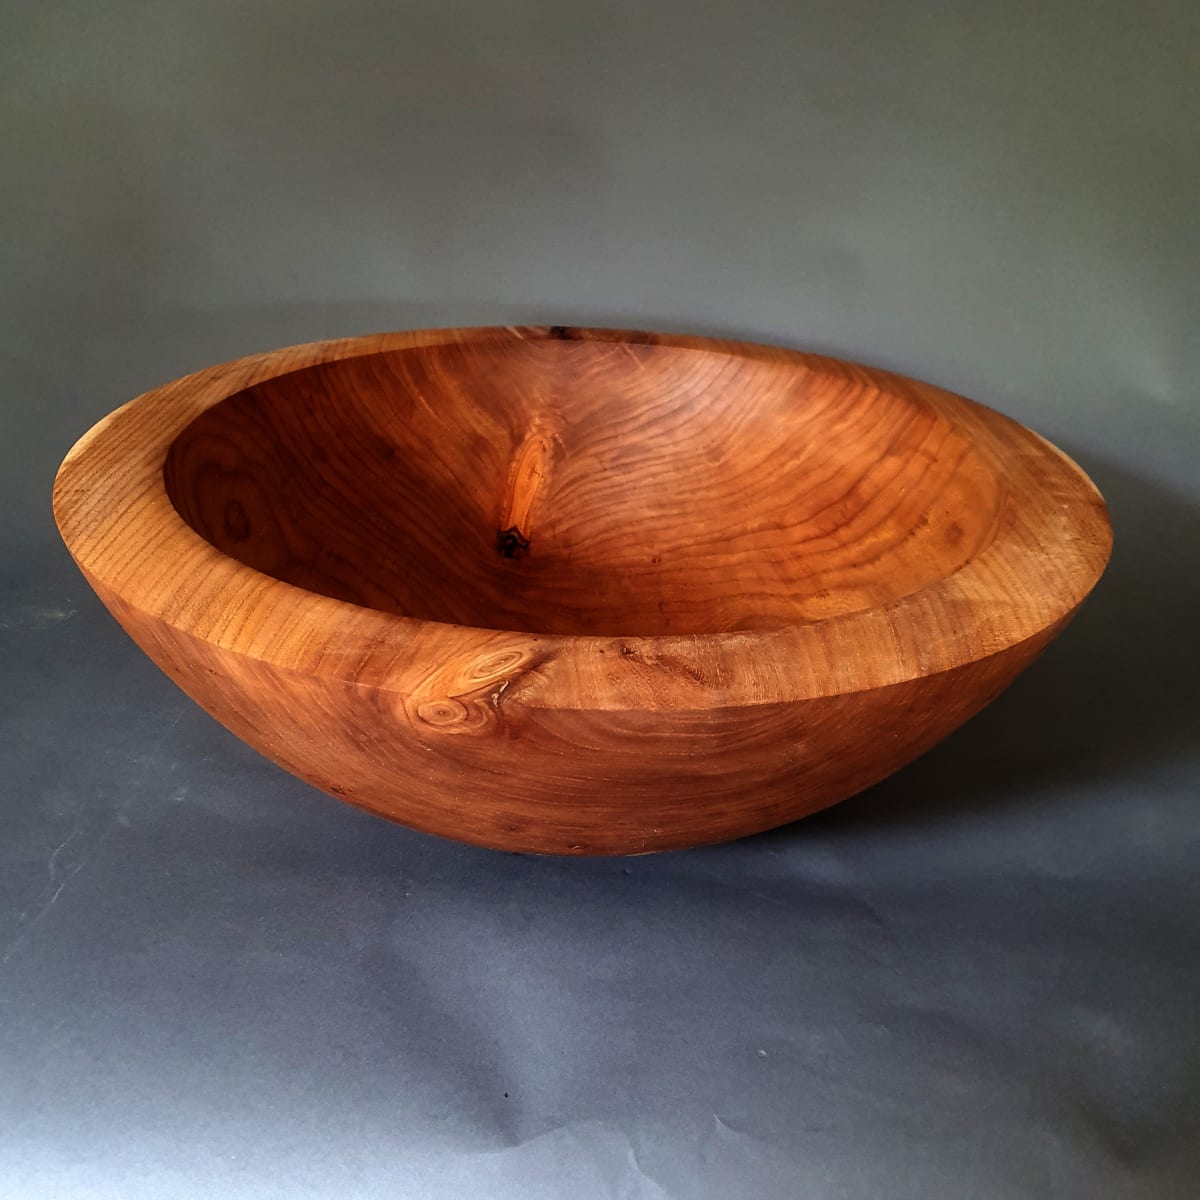 elm bowl 2021_2 by Simon King  Image: large elm bowl